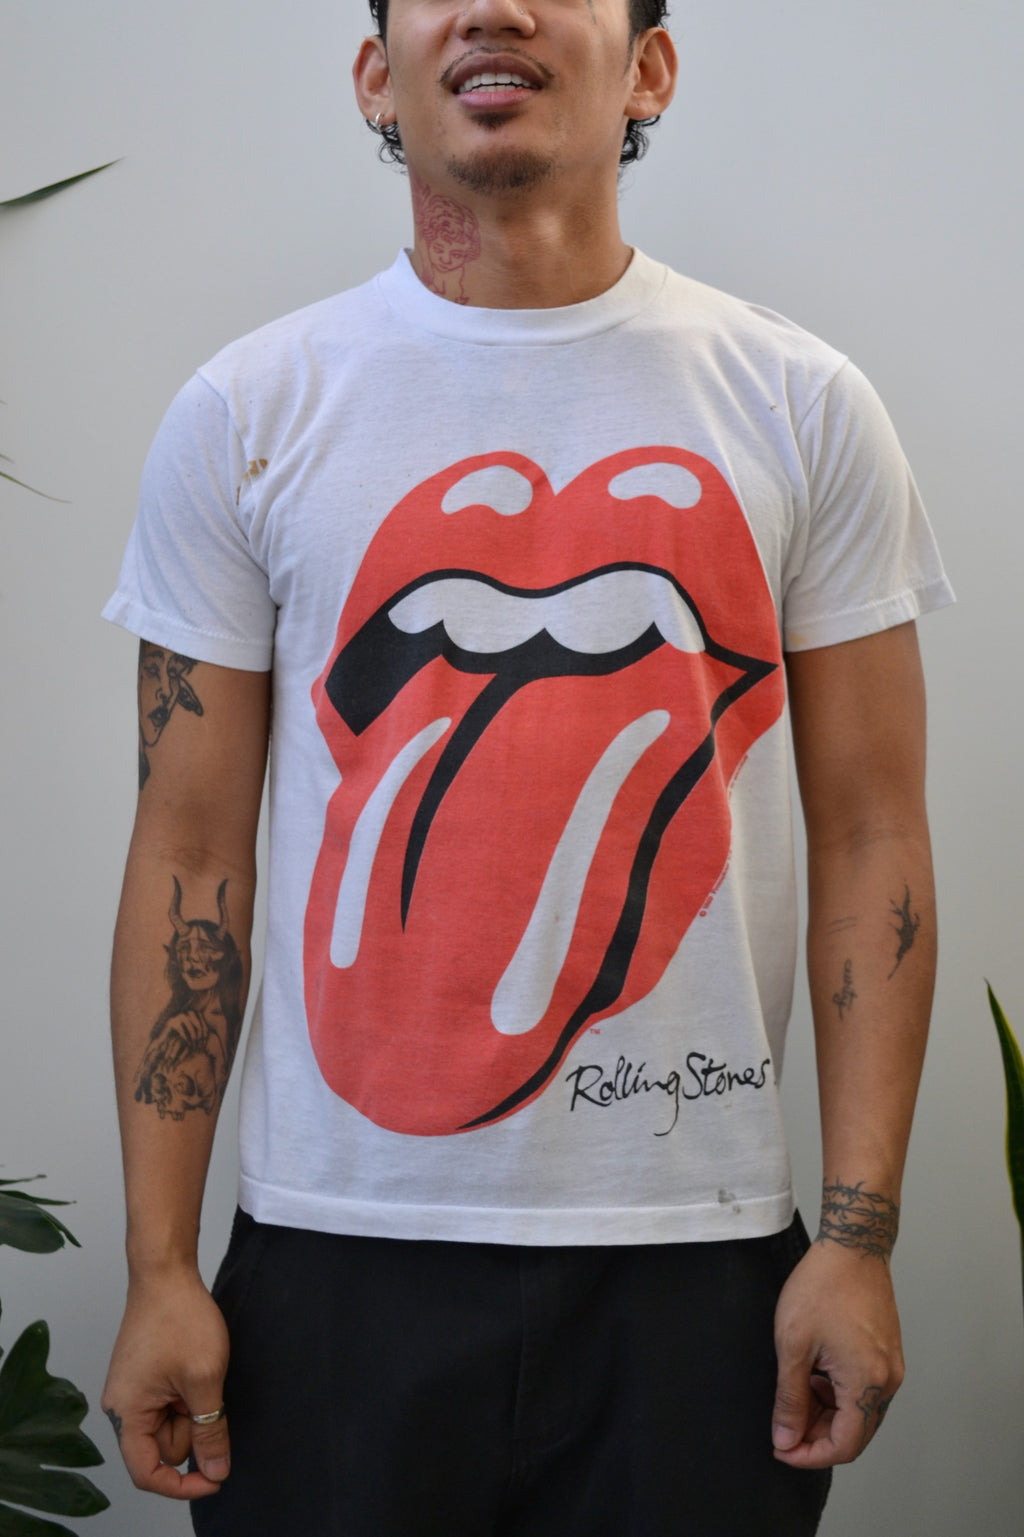 Rolling Stones 1989 Tour Tee